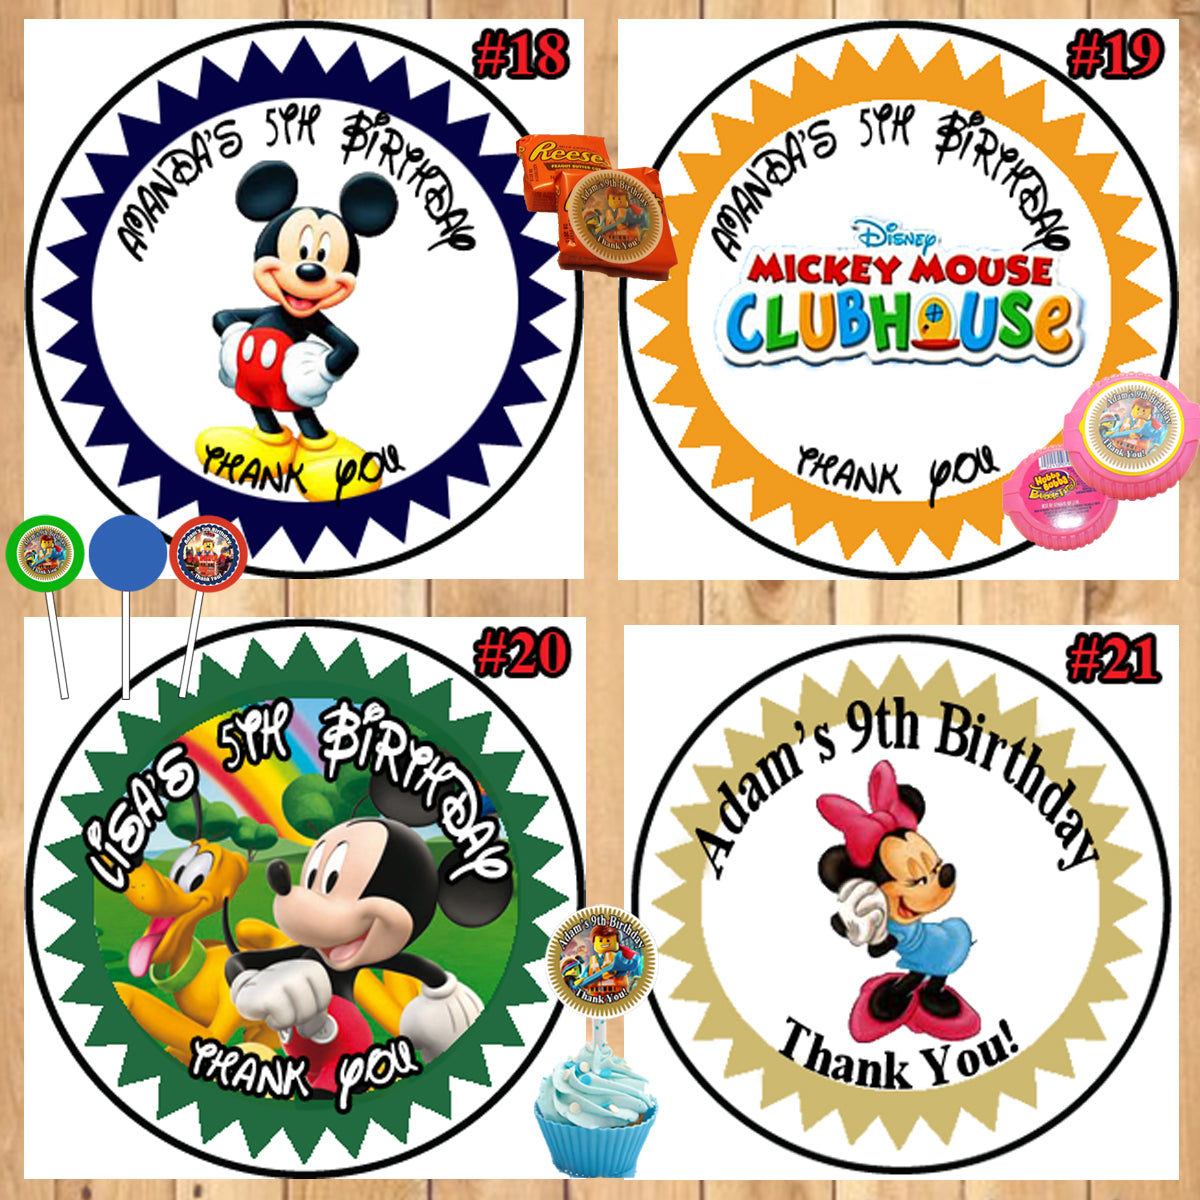 Sticker personalized Minnie Mouse, Disney